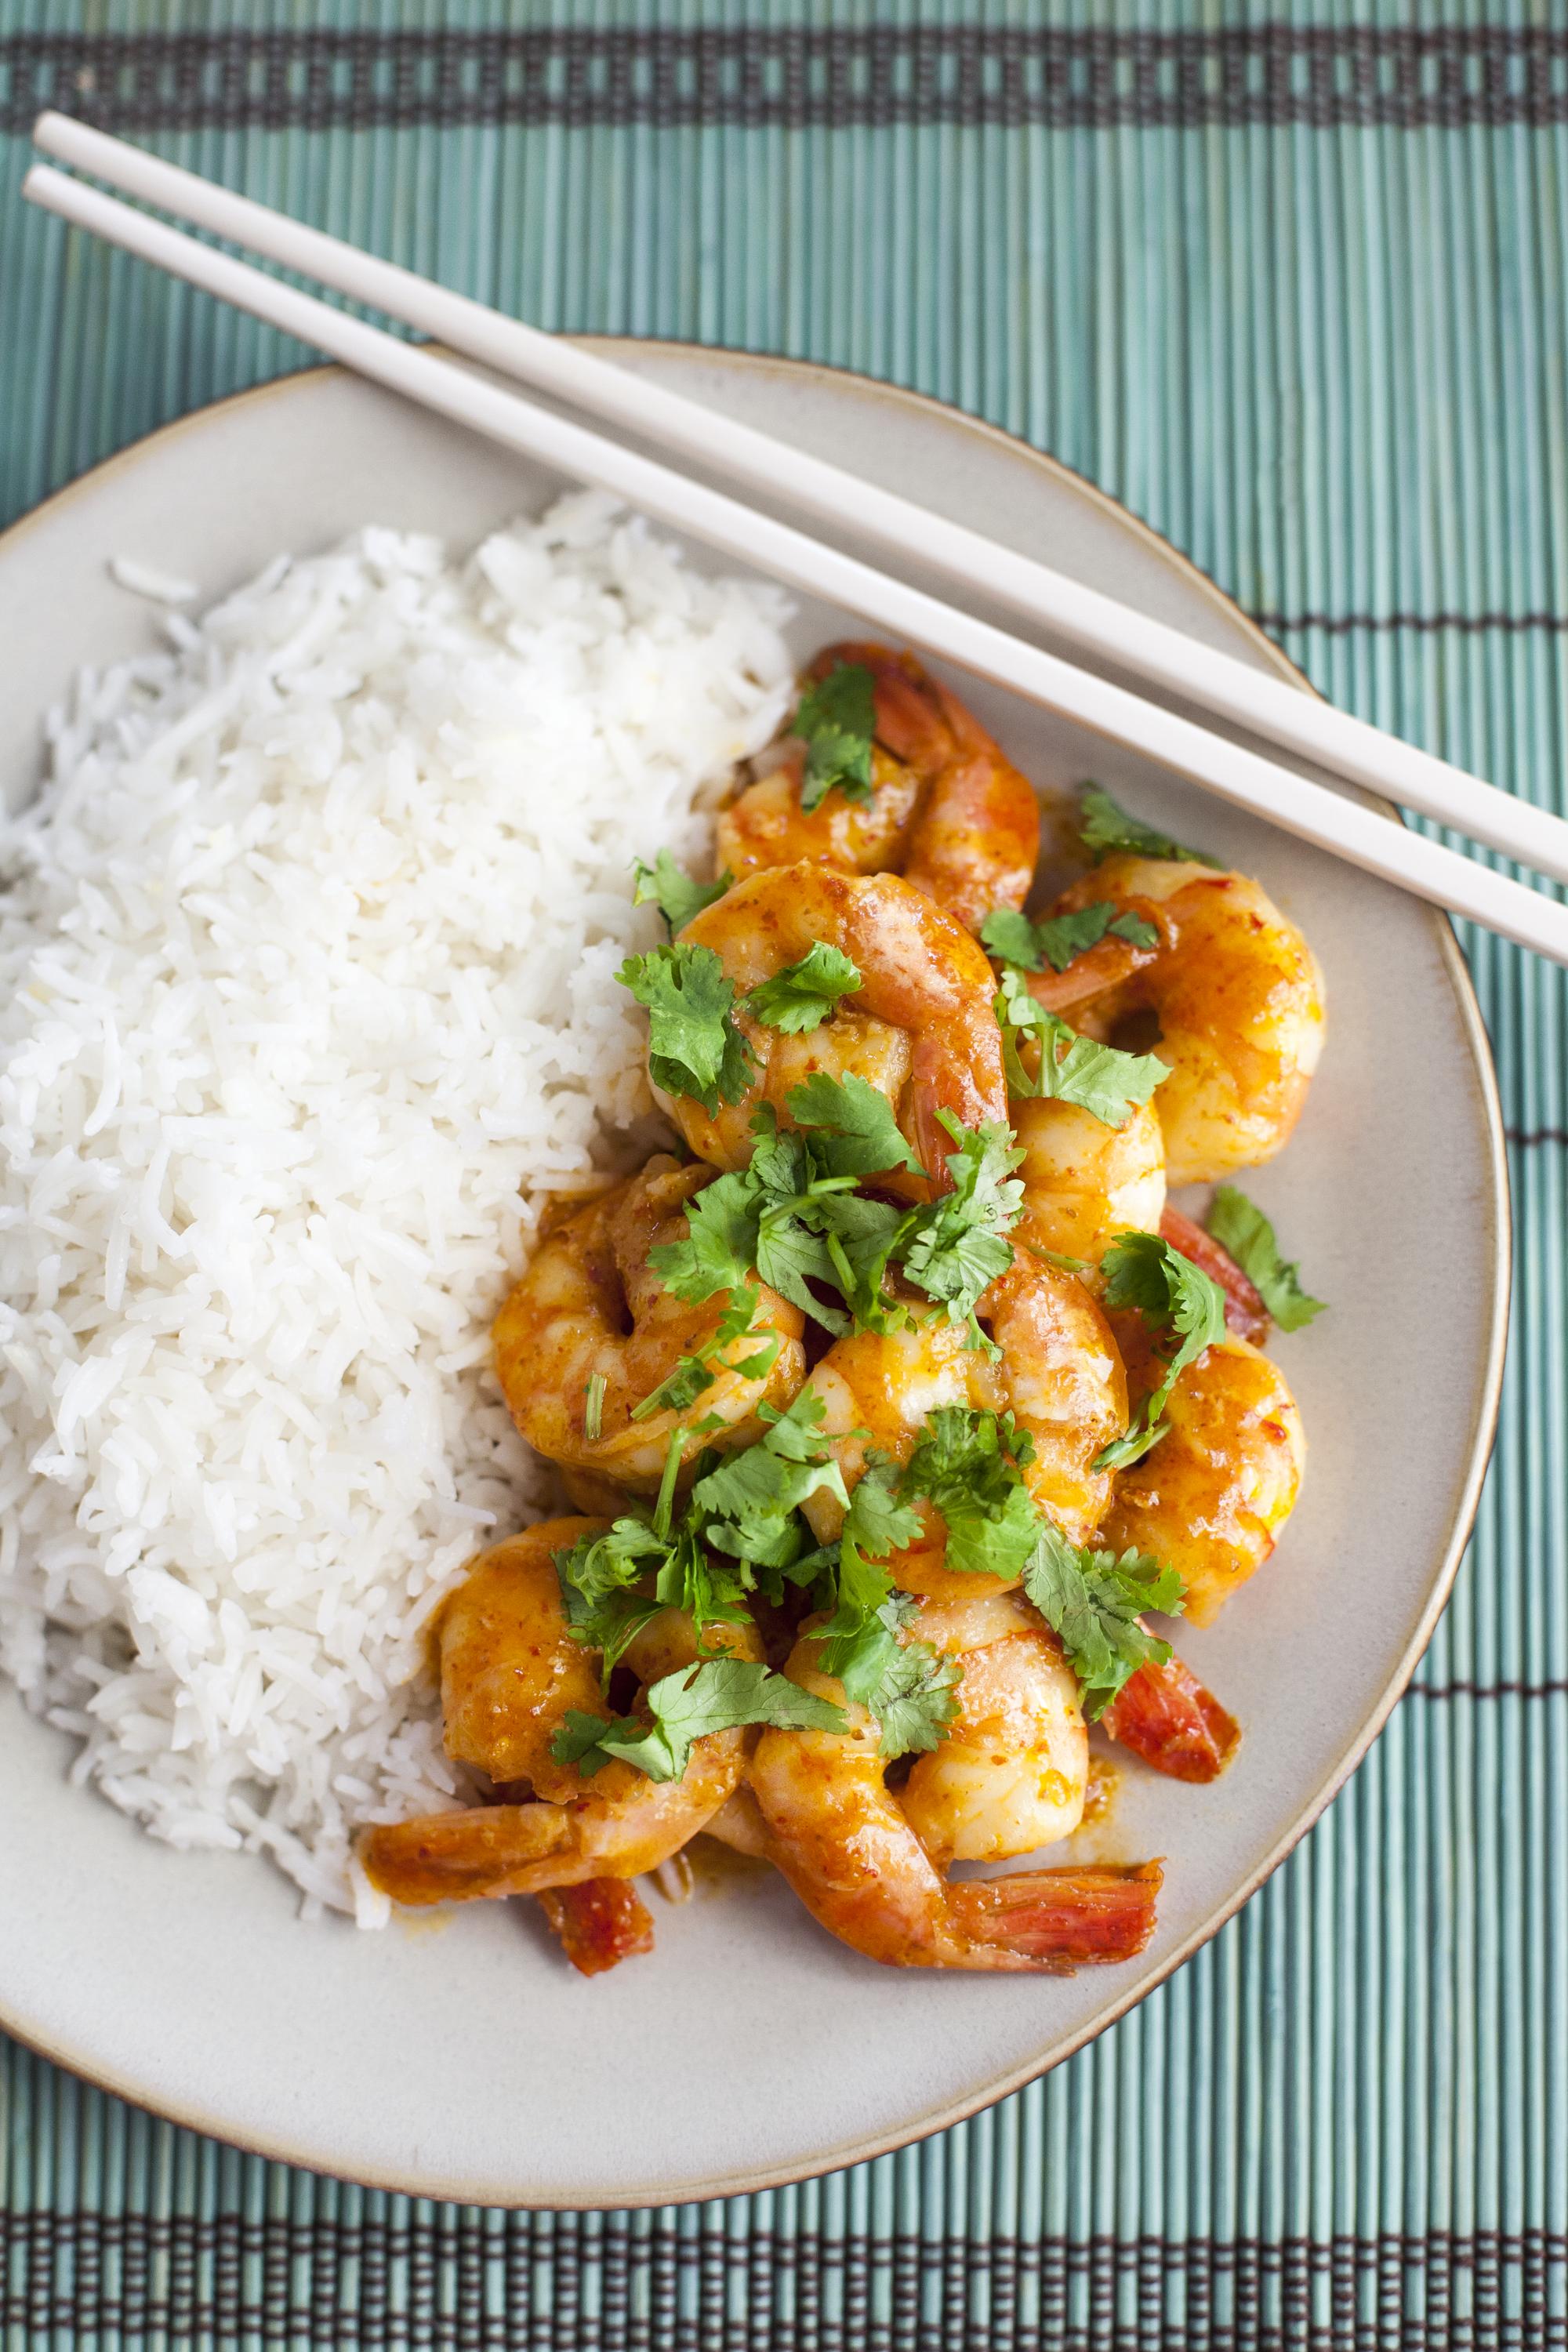 Curry Butter Shrimp | acalculatedwhisk.com